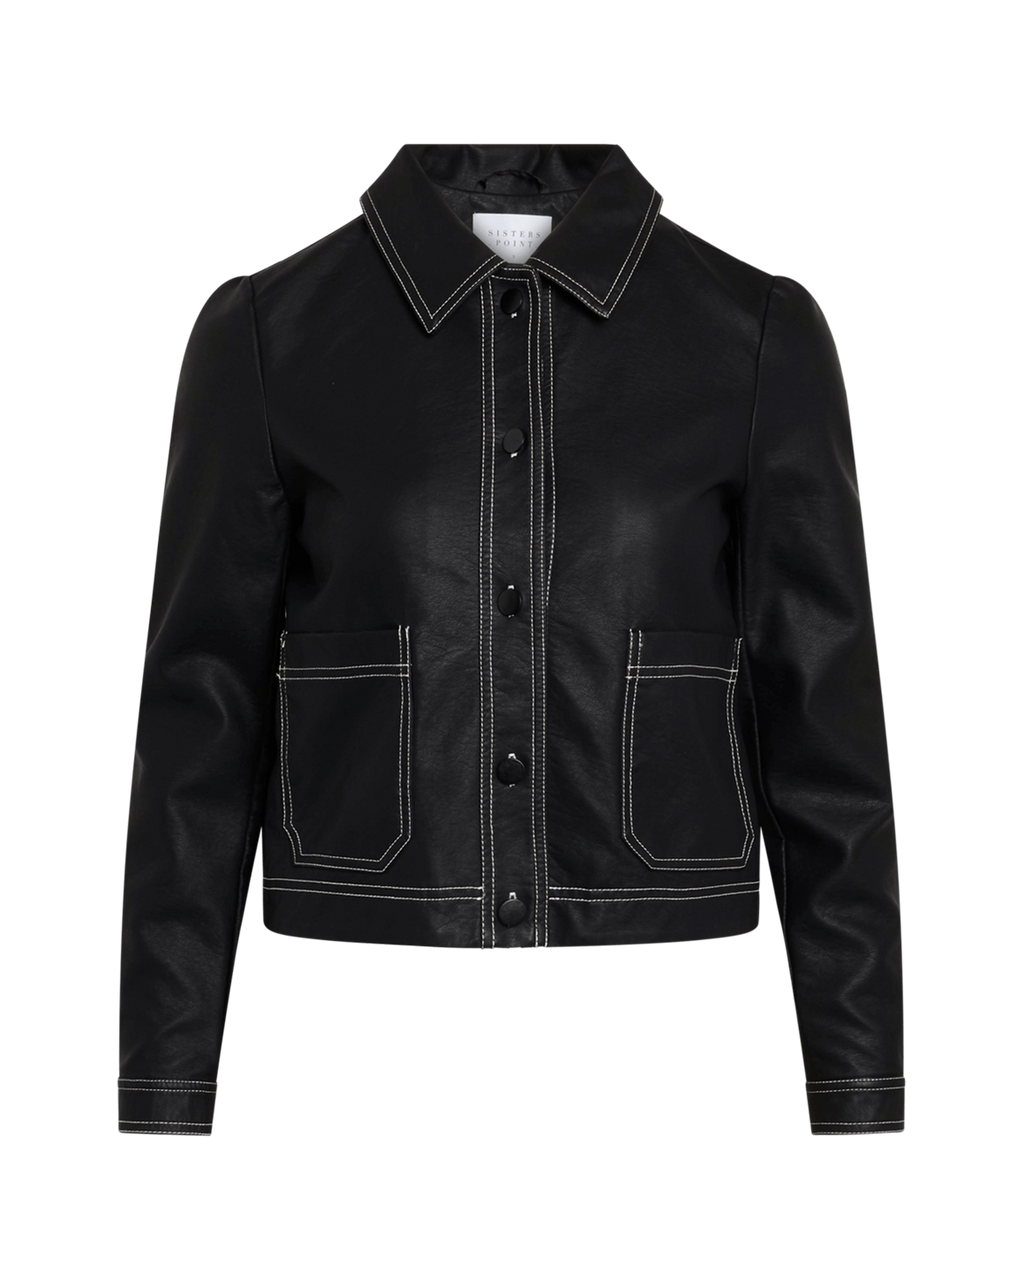 Dura jacket - Black